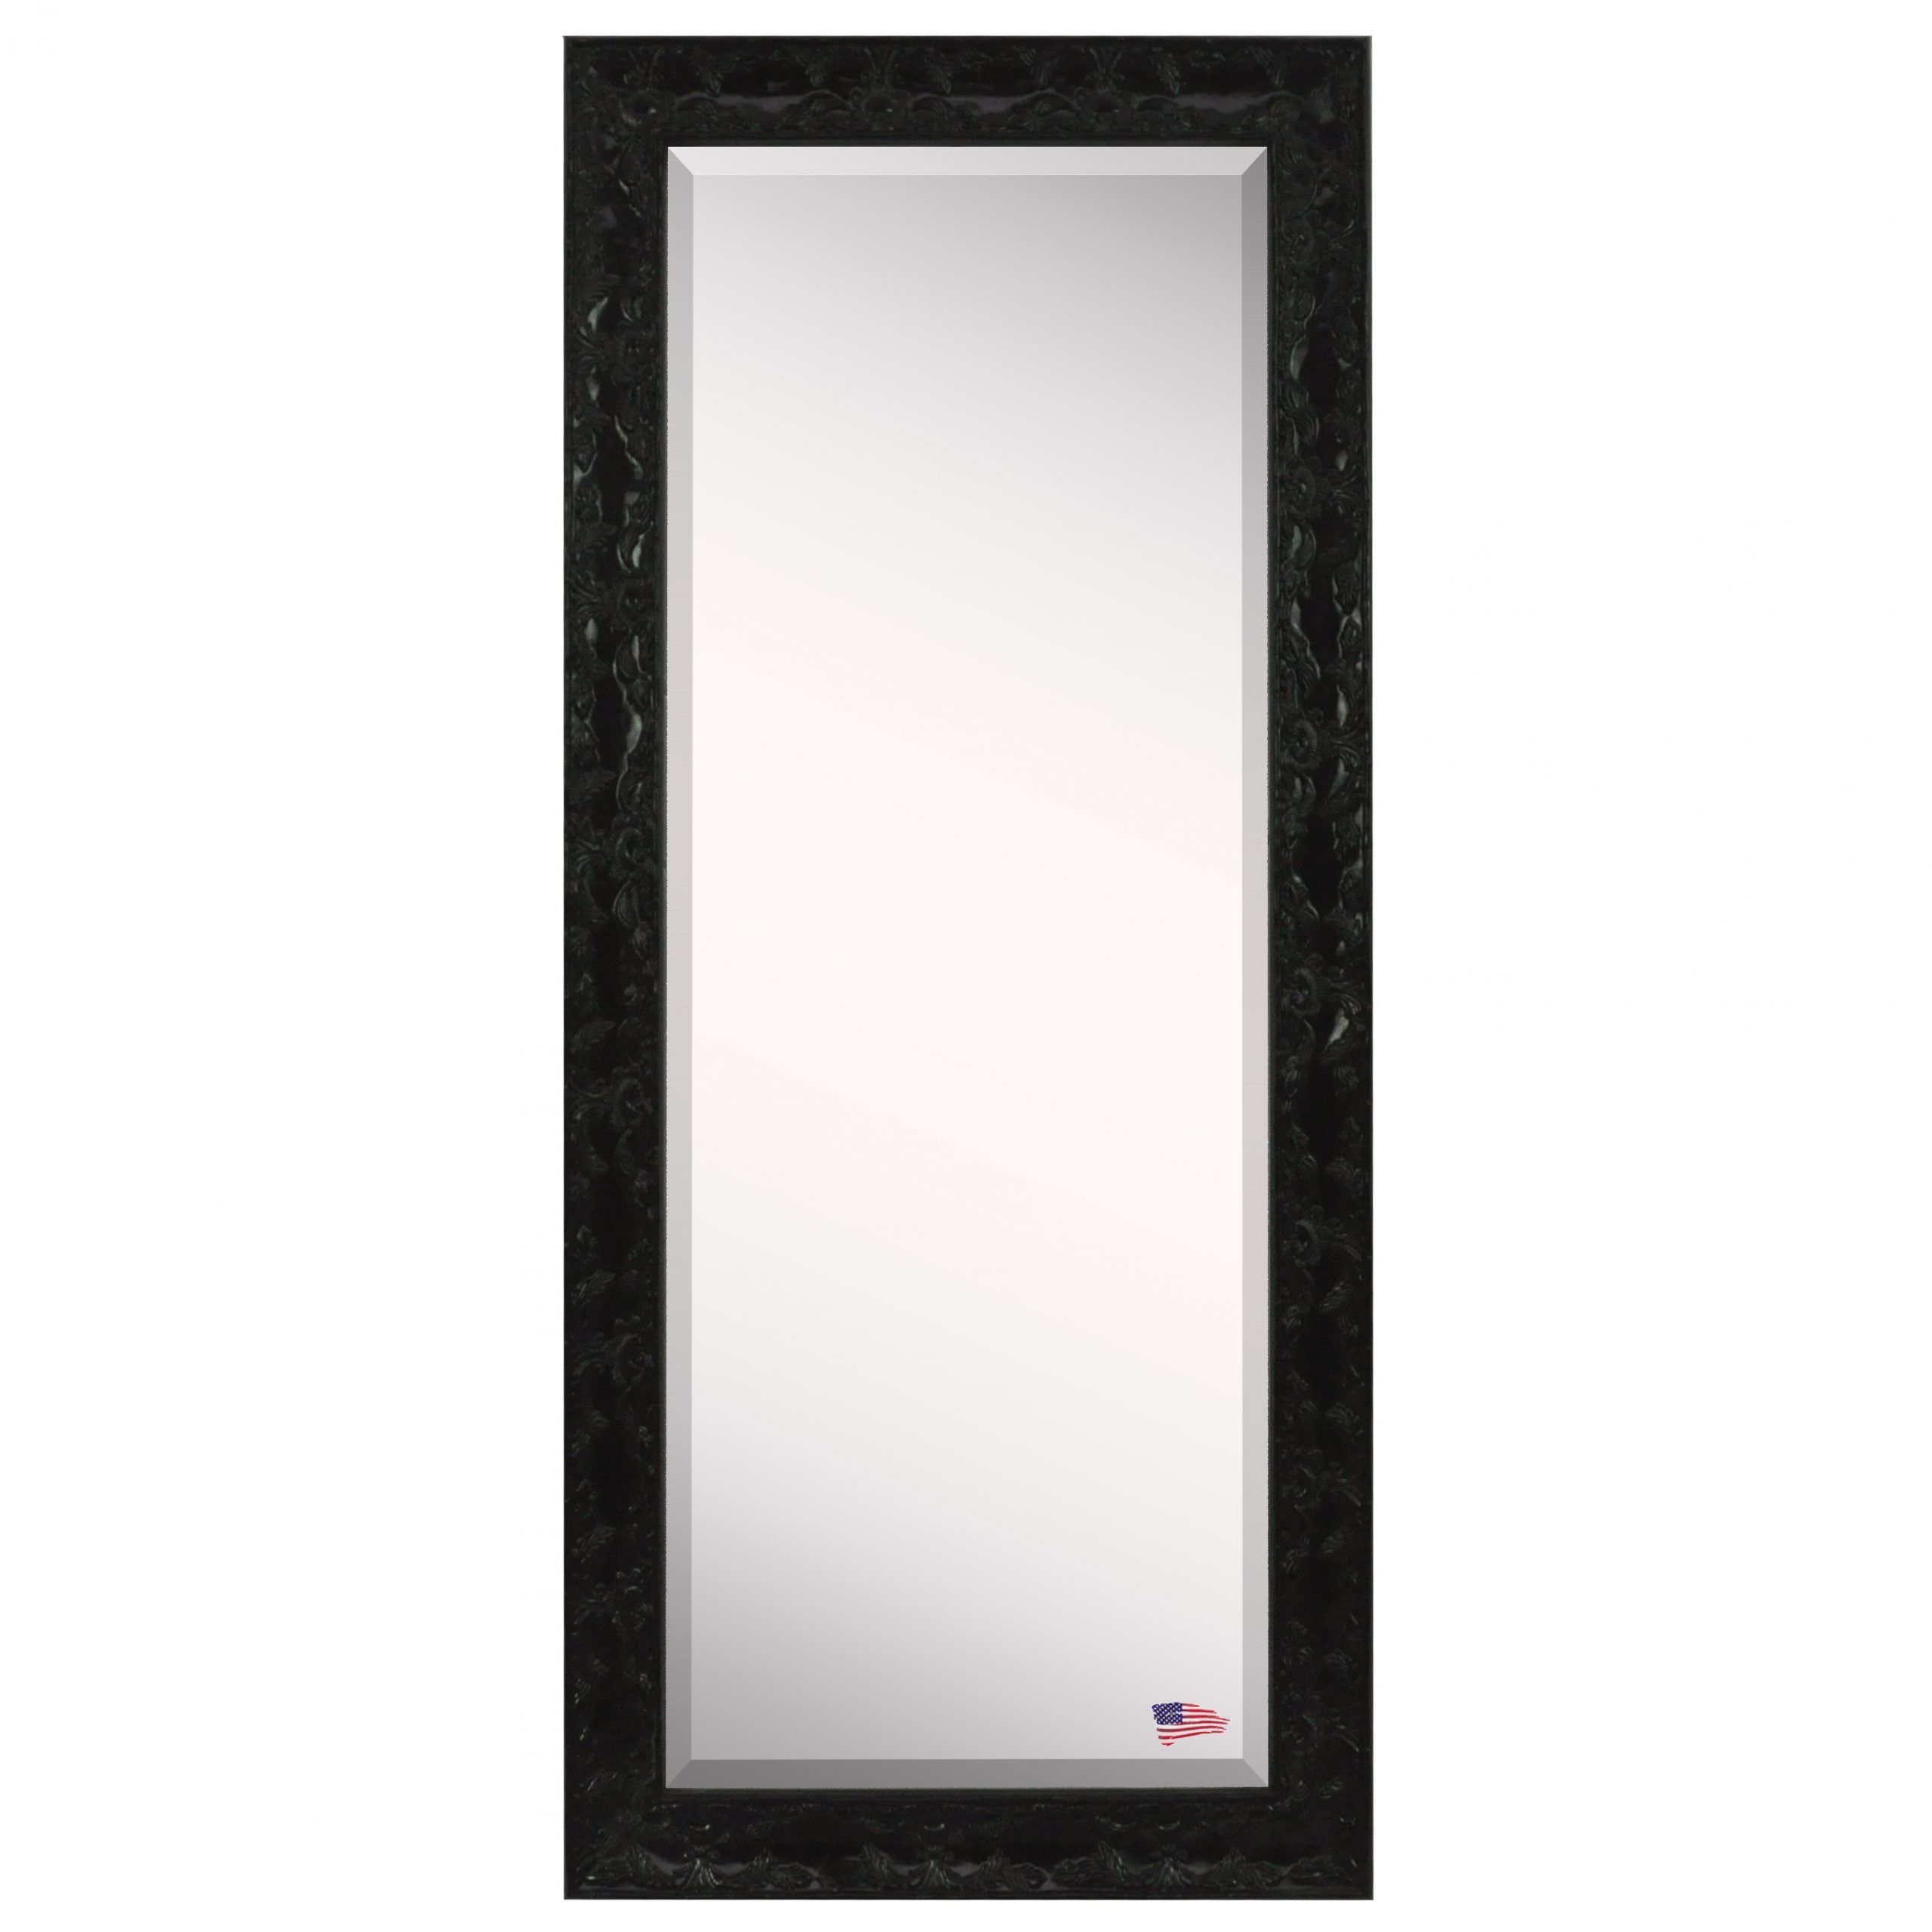 Rosalind Wheeler Black Rectangle Wall Mirror | Wayfair Inside Black Beaded Rectangular Wall Mirrors (View 15 of 15)